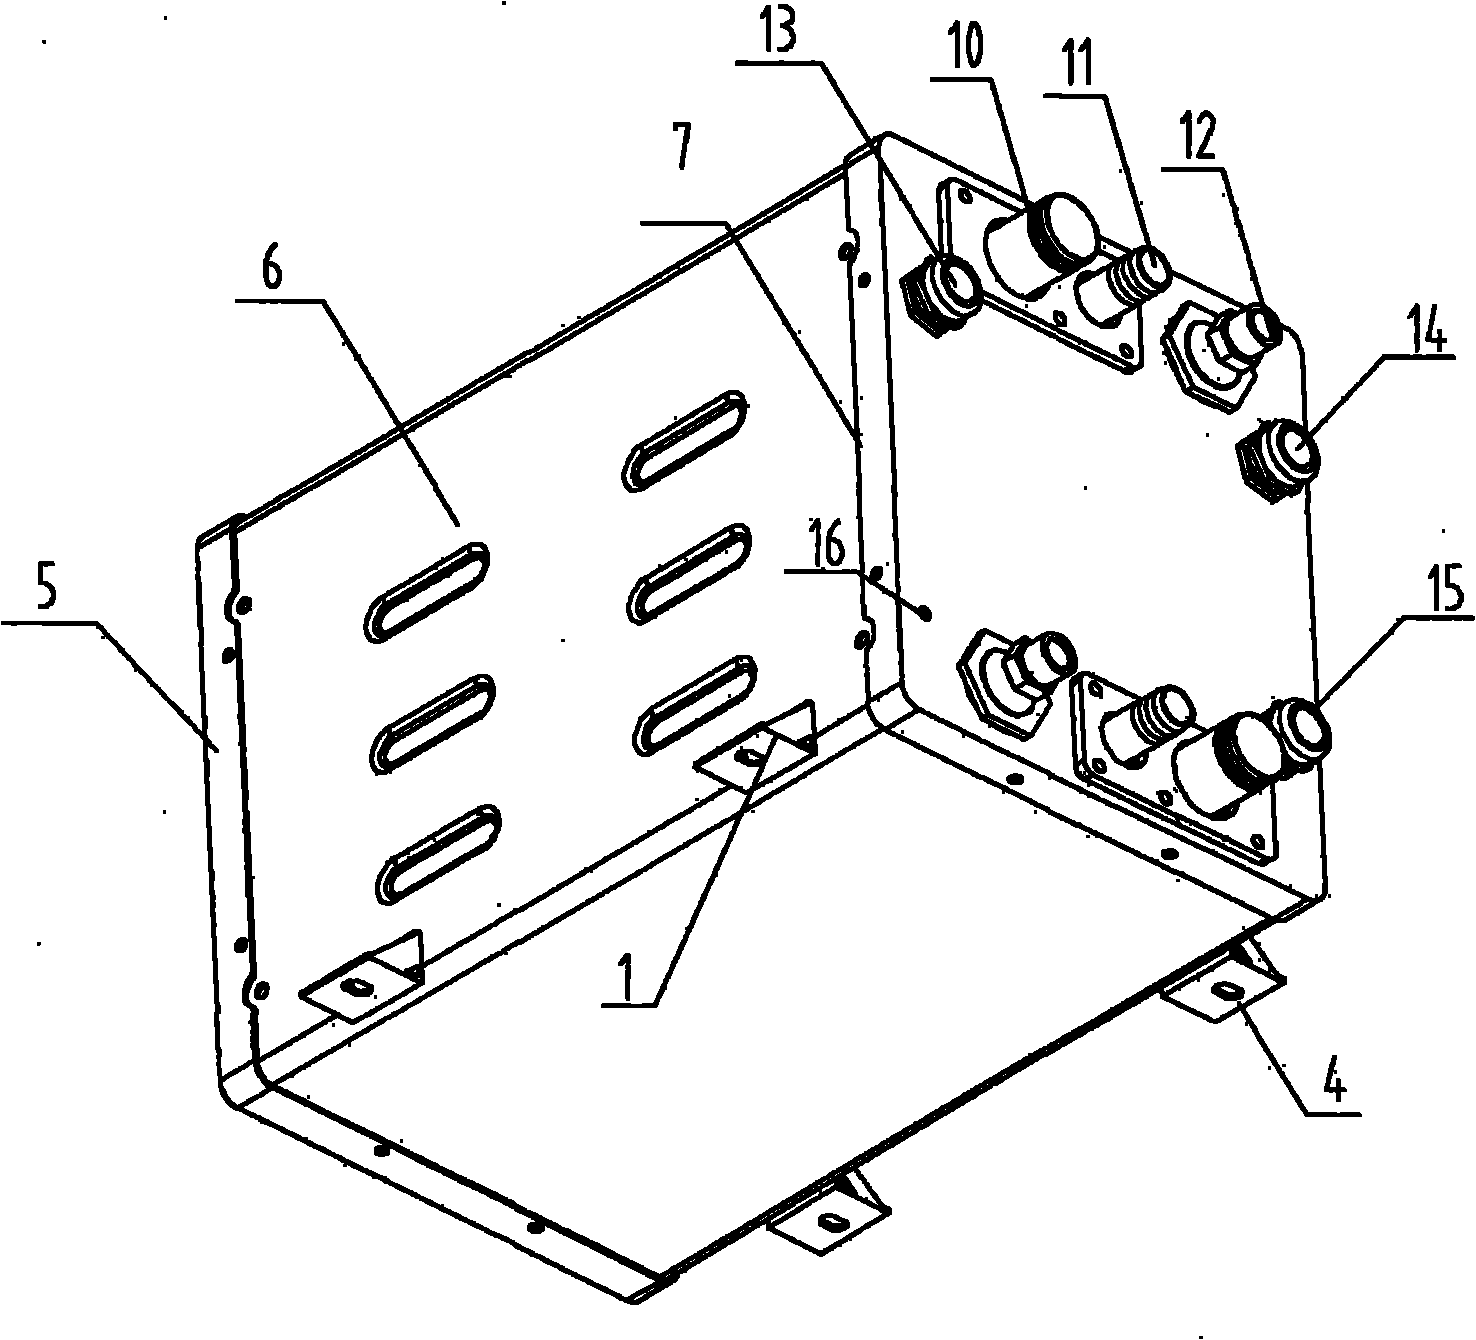 Encapsulation method of galvanic pile module of fuel cell